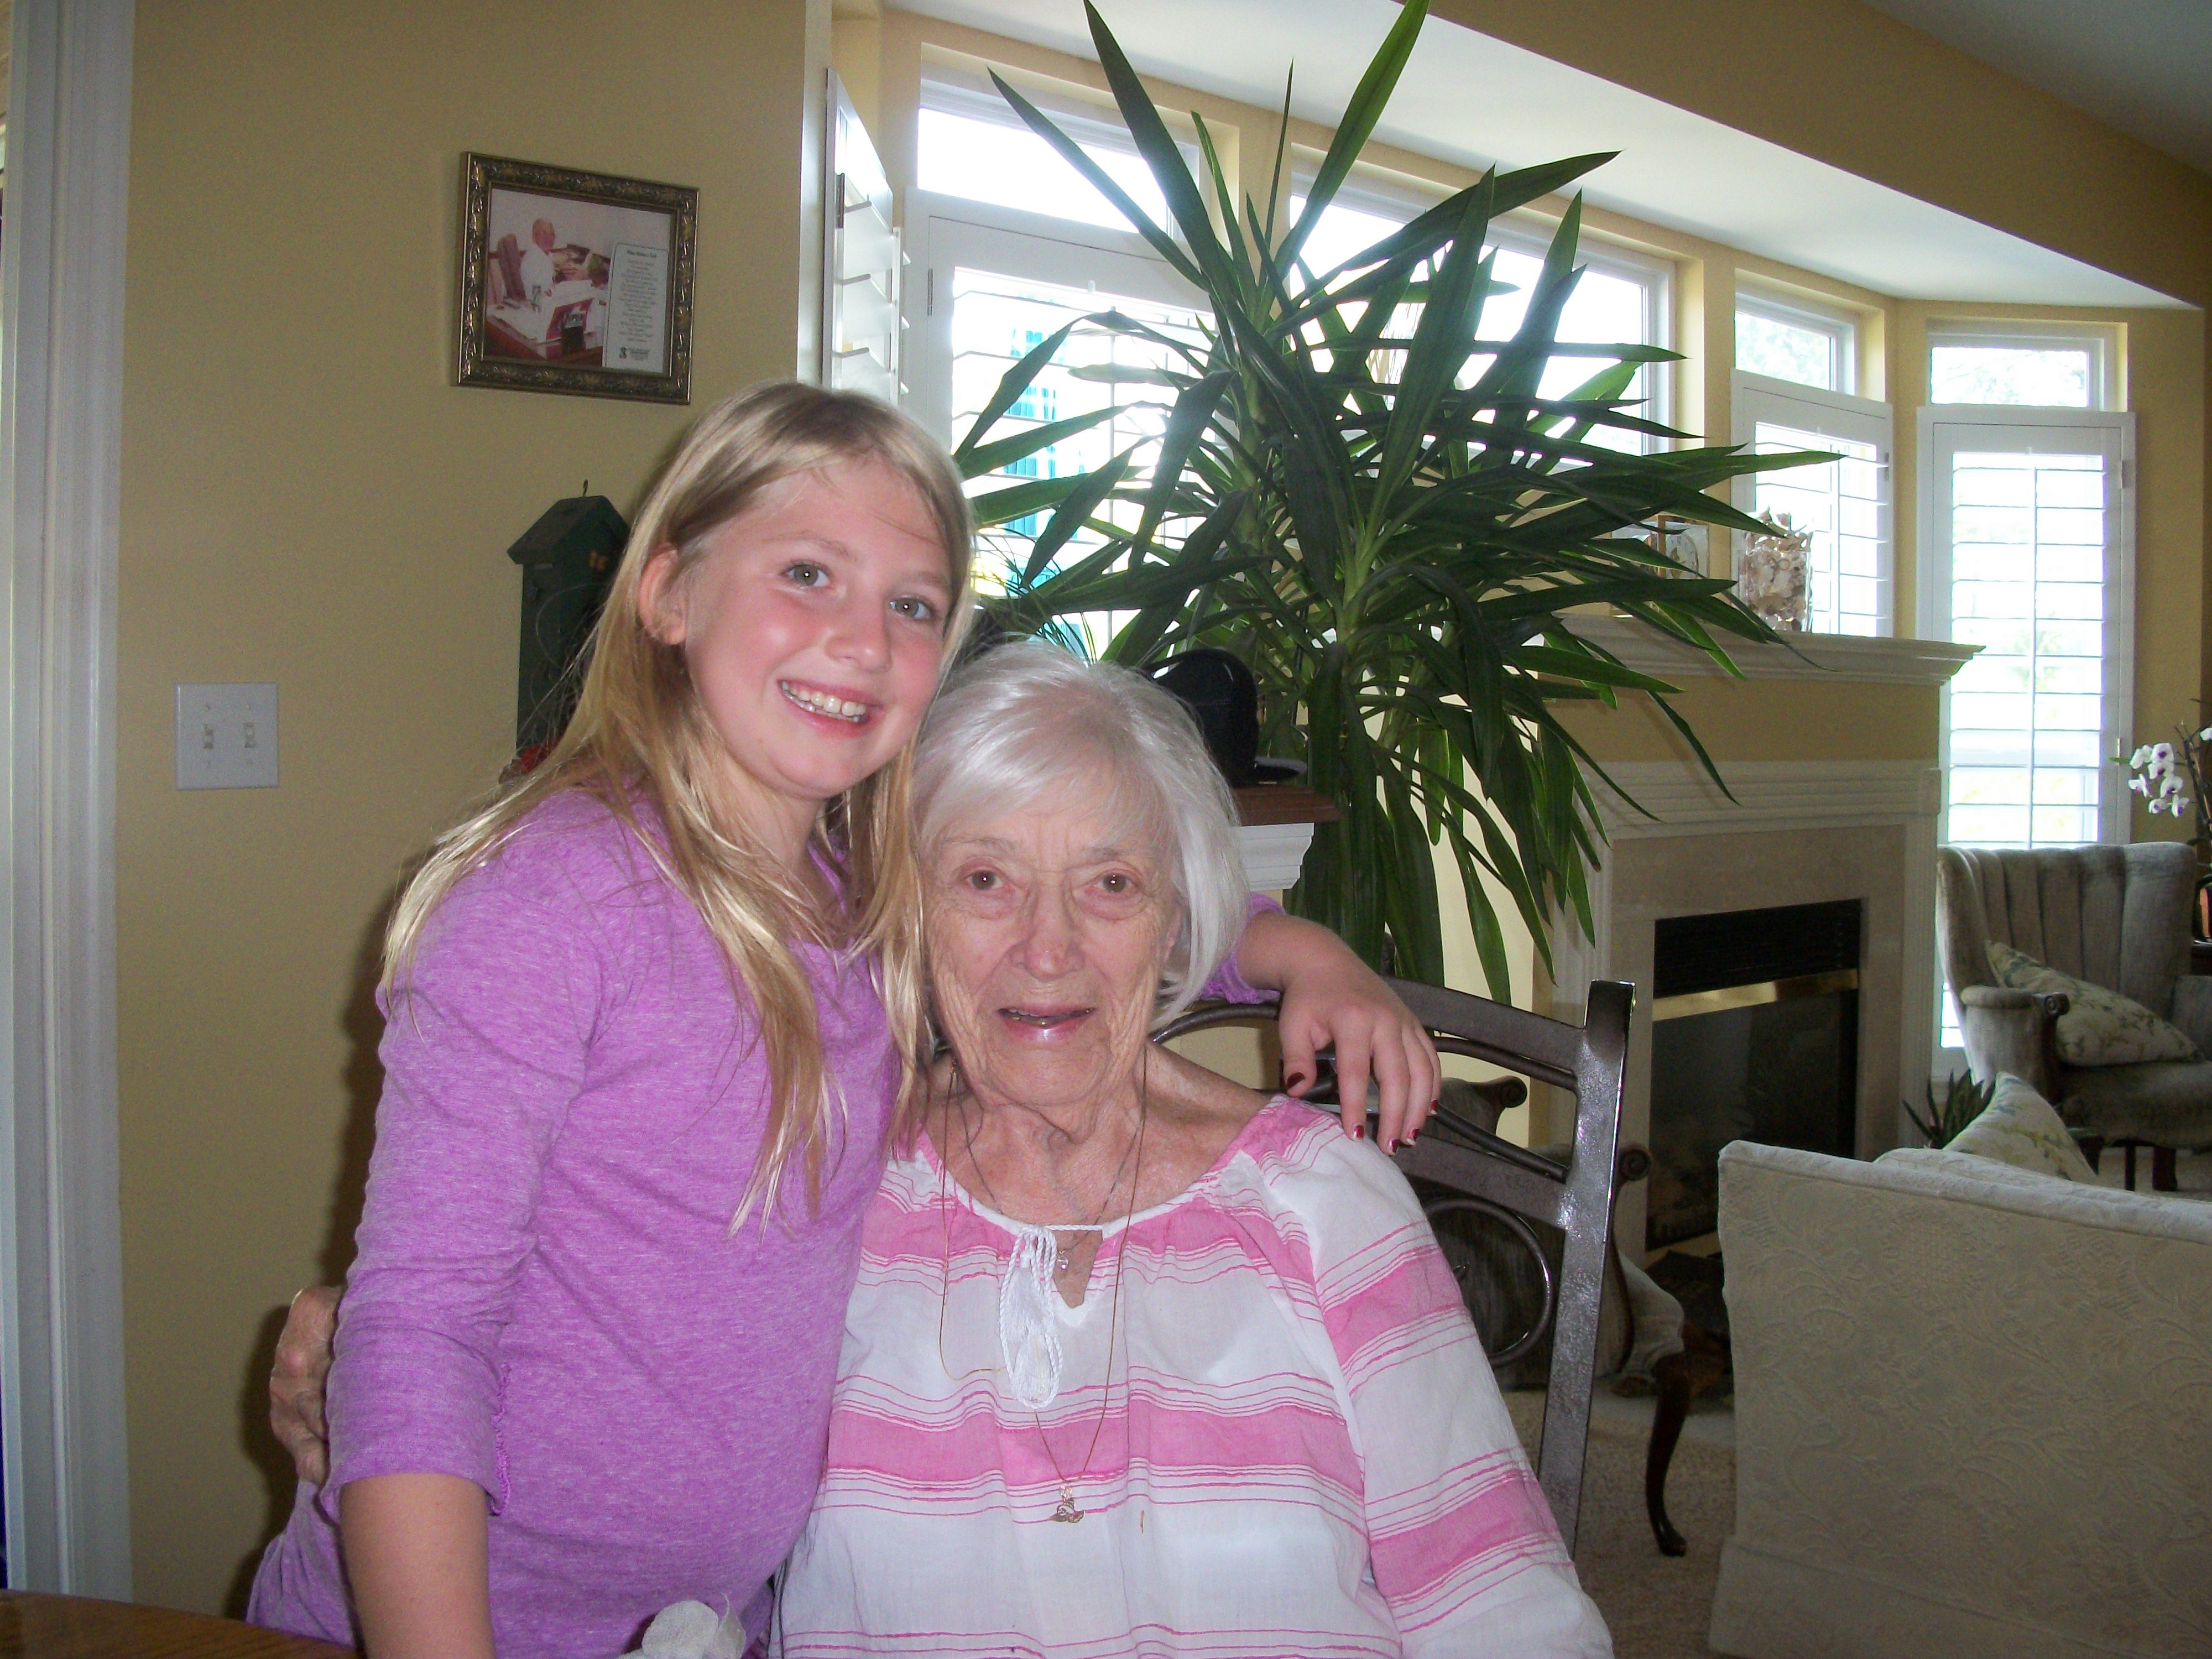 My Great Grandma and I